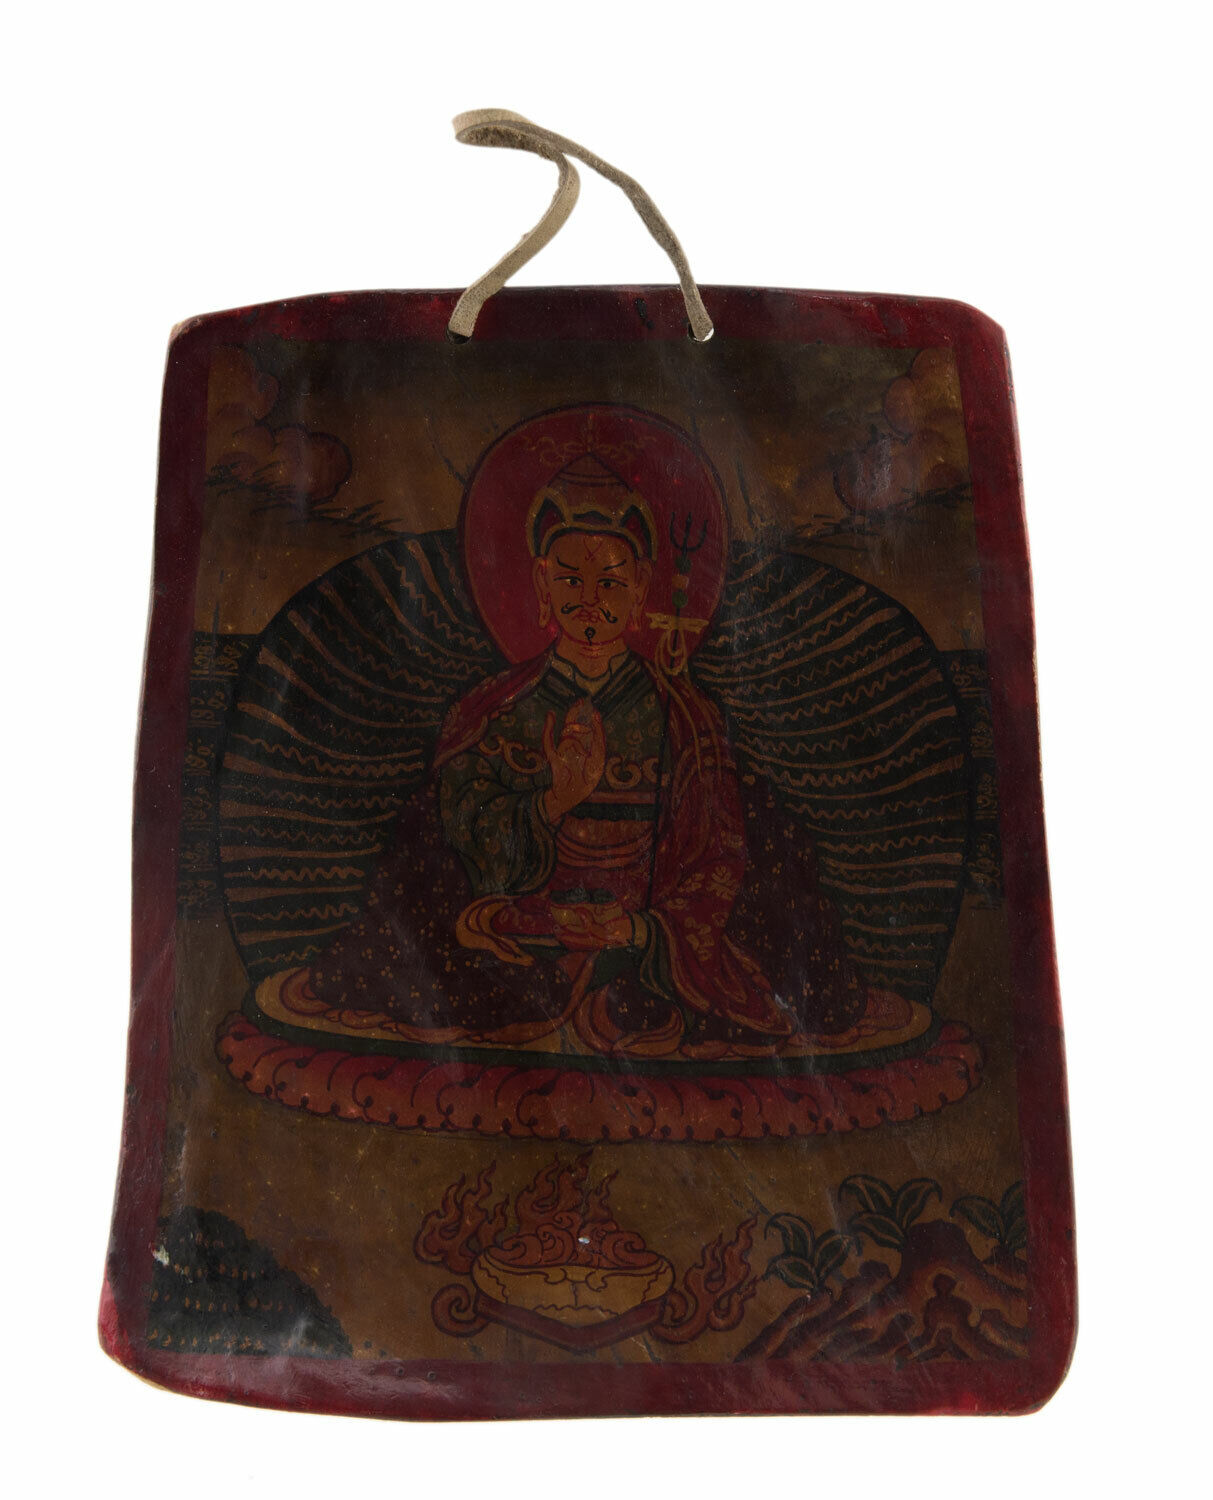 Gourou Rinpoché Tsakli tibétain peinture fait main Bodhisattva Thangka 791 Nieuwe versie, beperkte verkoop